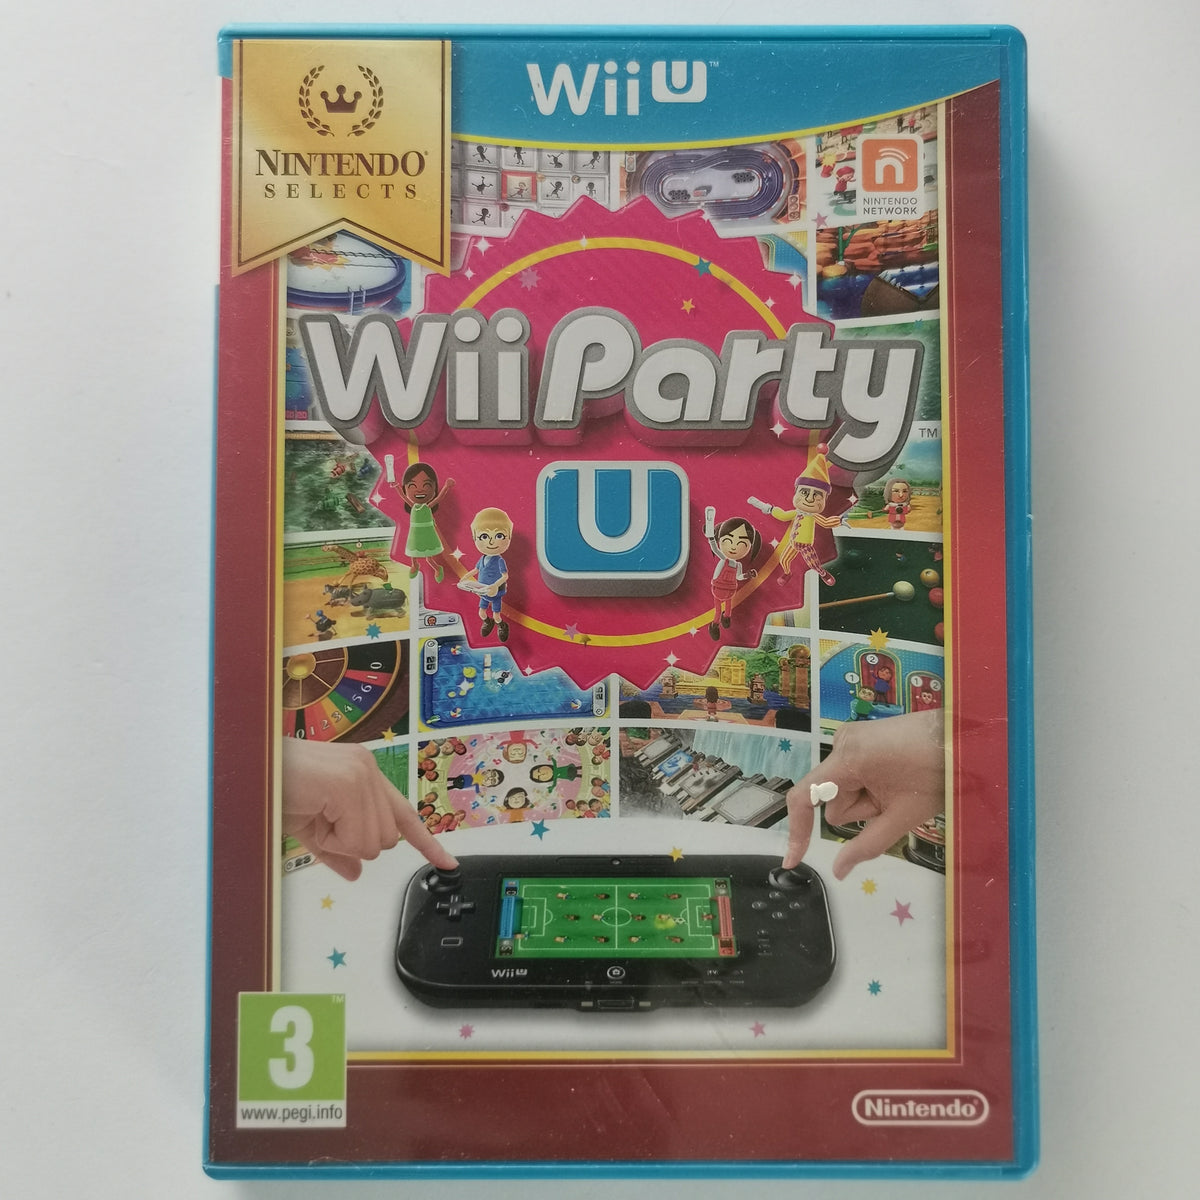 Nintendo WII Party U [WiiU]